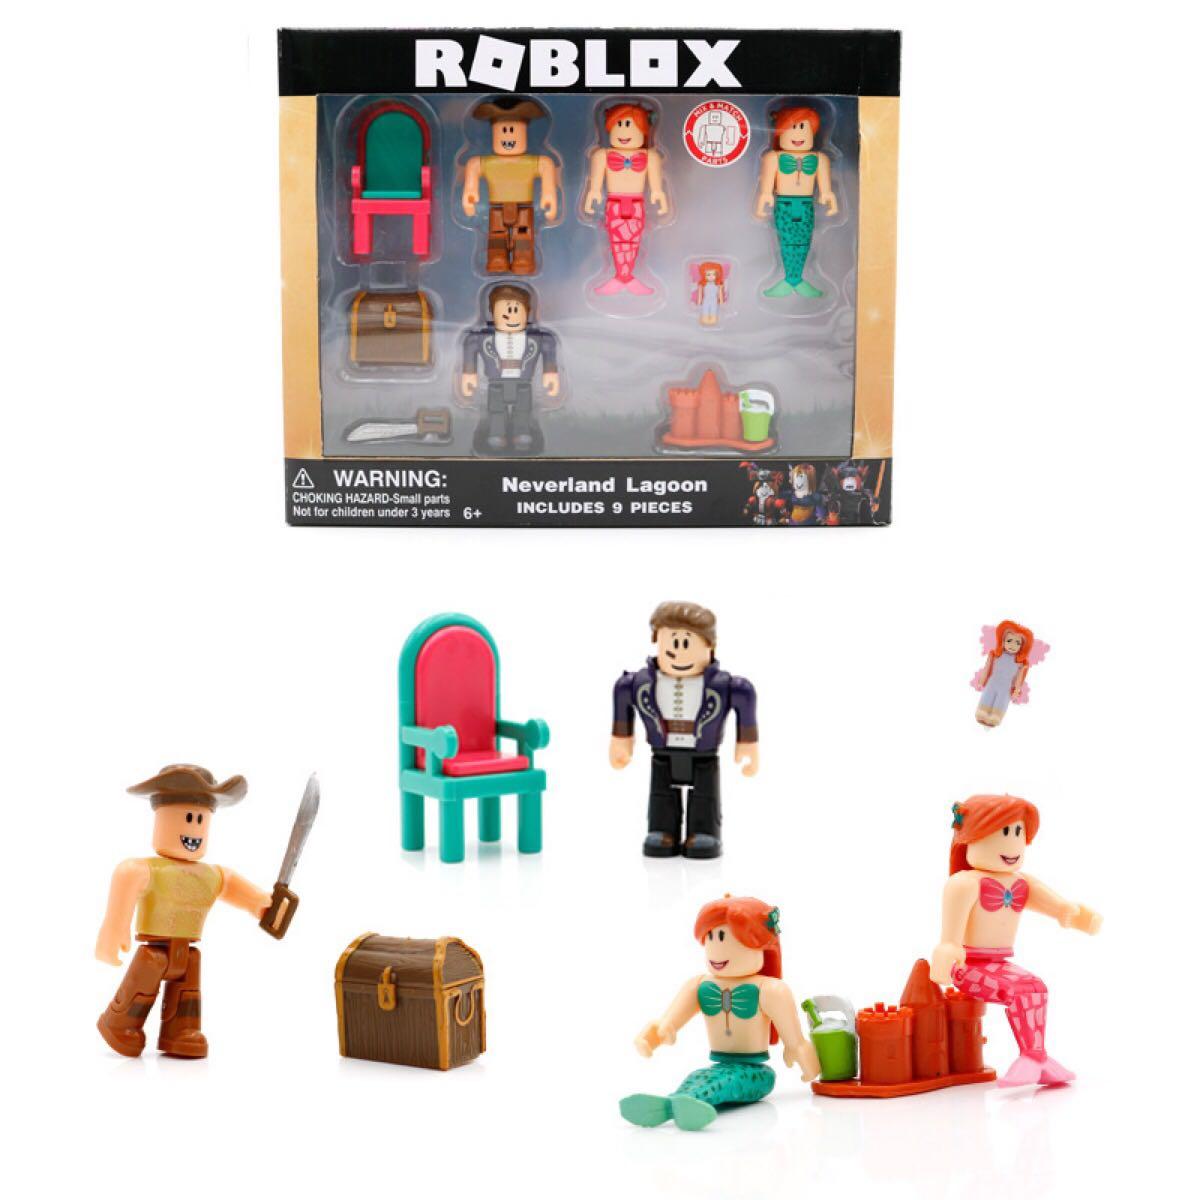 Instocks Roblox Figurines Toys Games Bricks Figurines On Carousell - roblox toys toys games bricks figurines on carousell